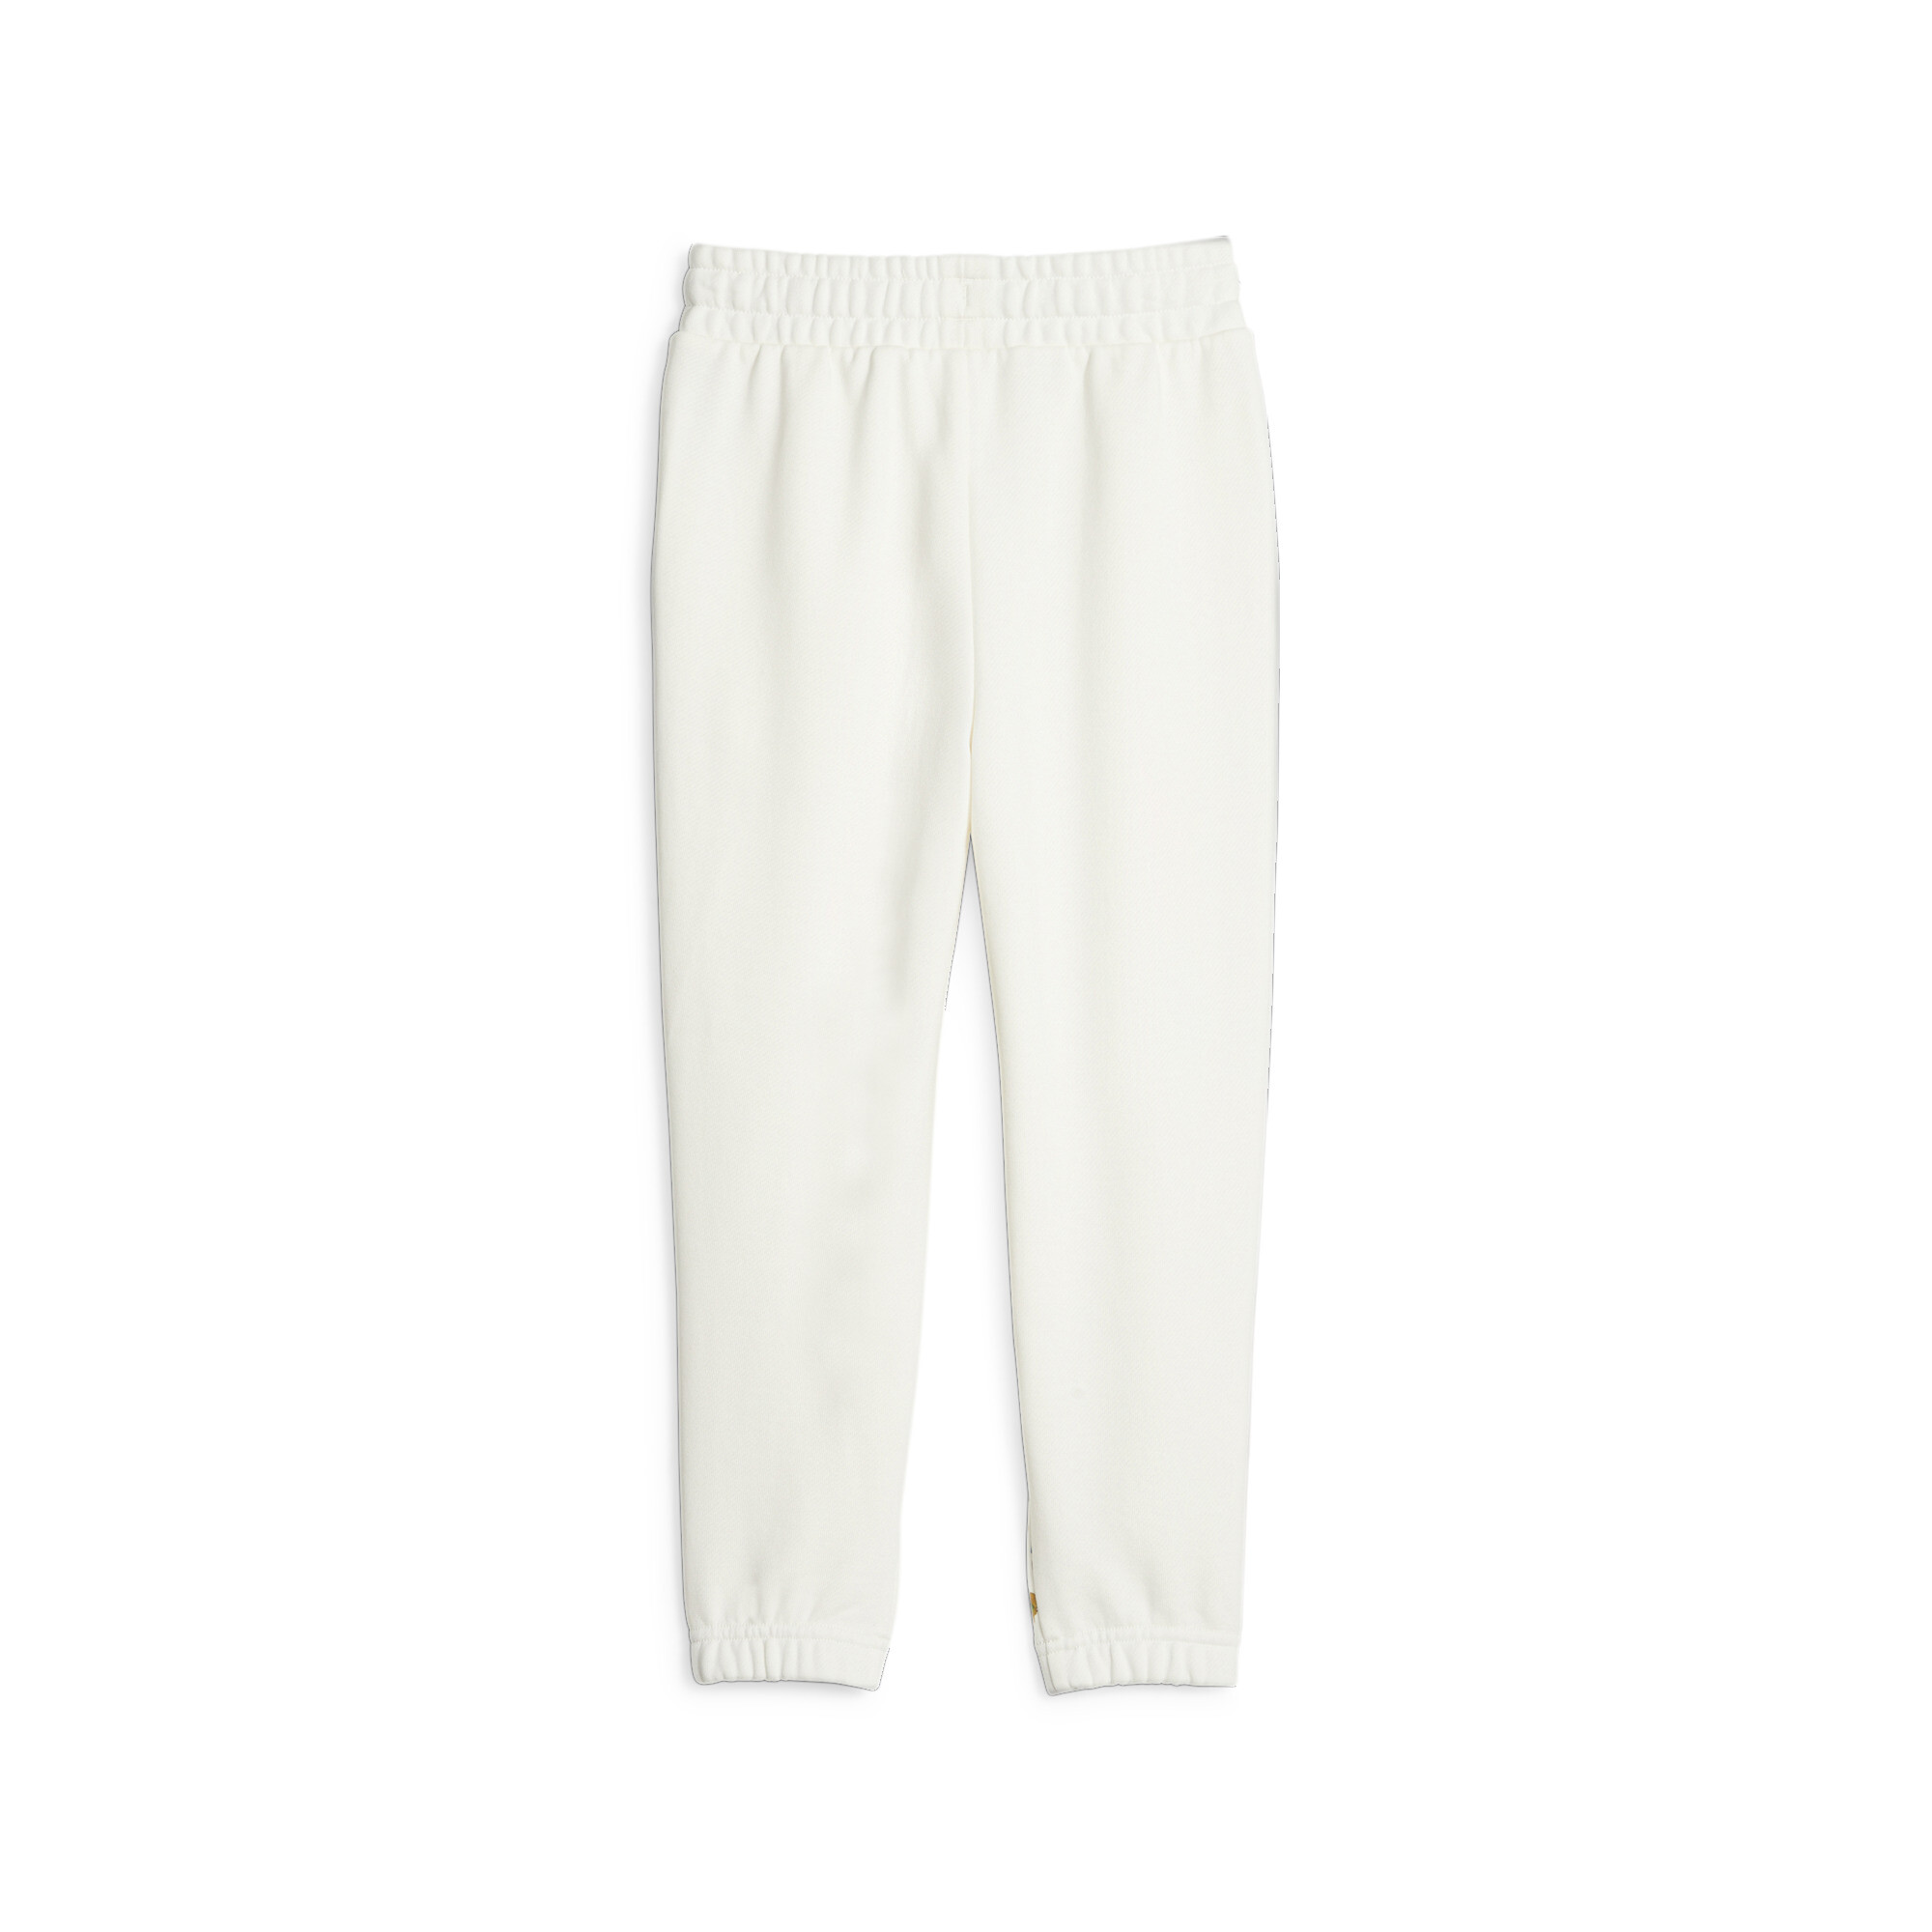 PUMA X LIBERTY Sweatpants In White, Size 4-5 Youth